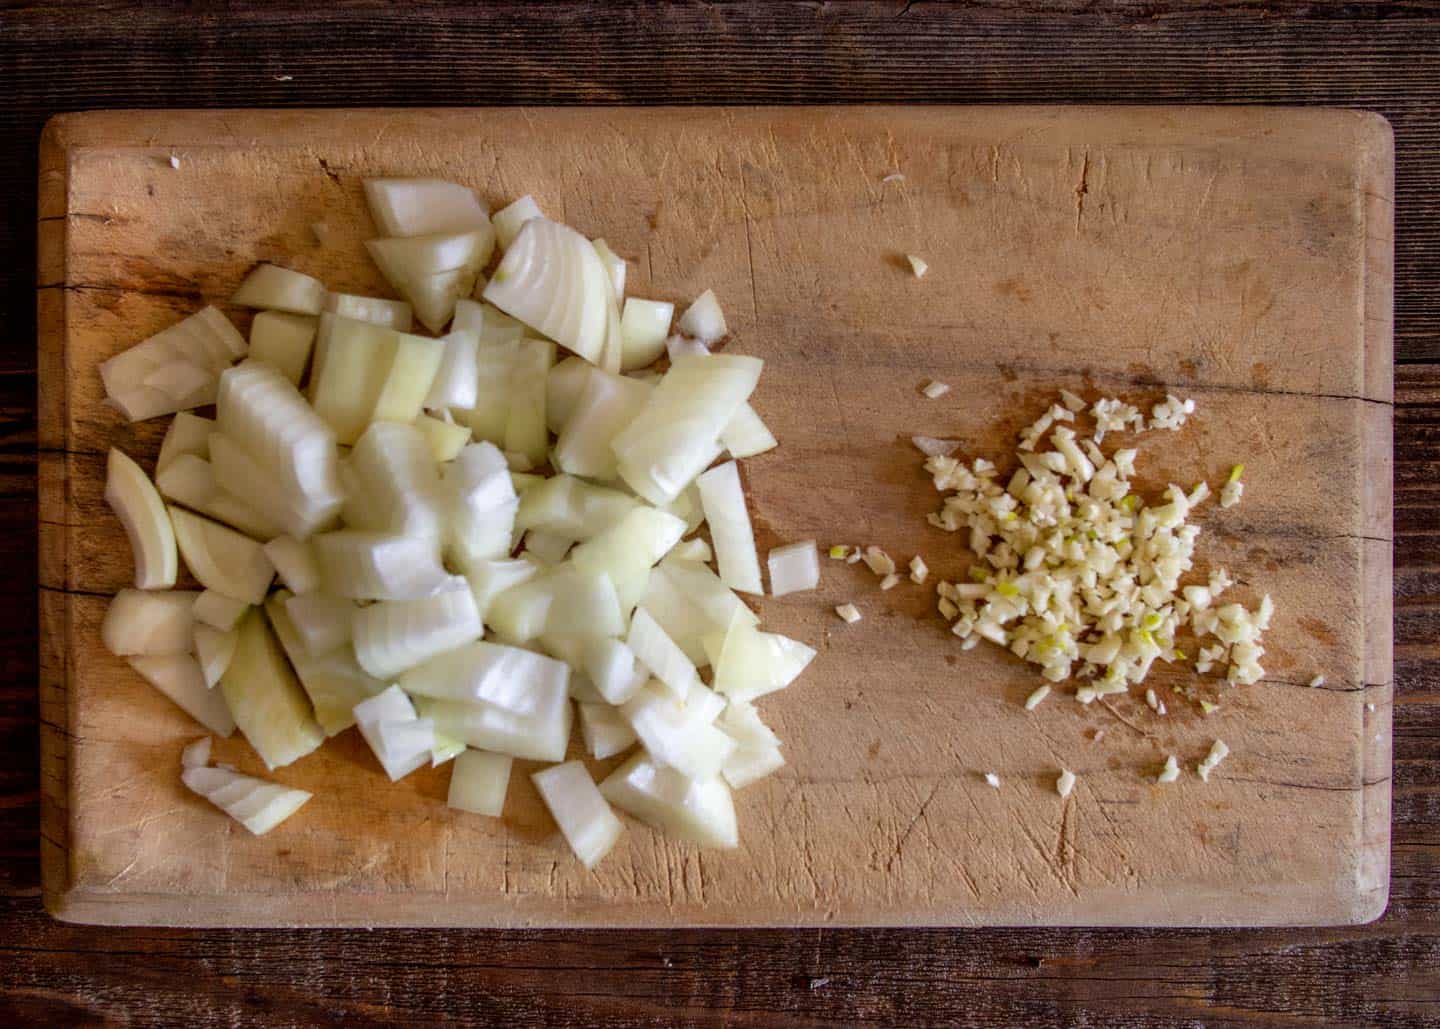 Chop onion and mince garlic